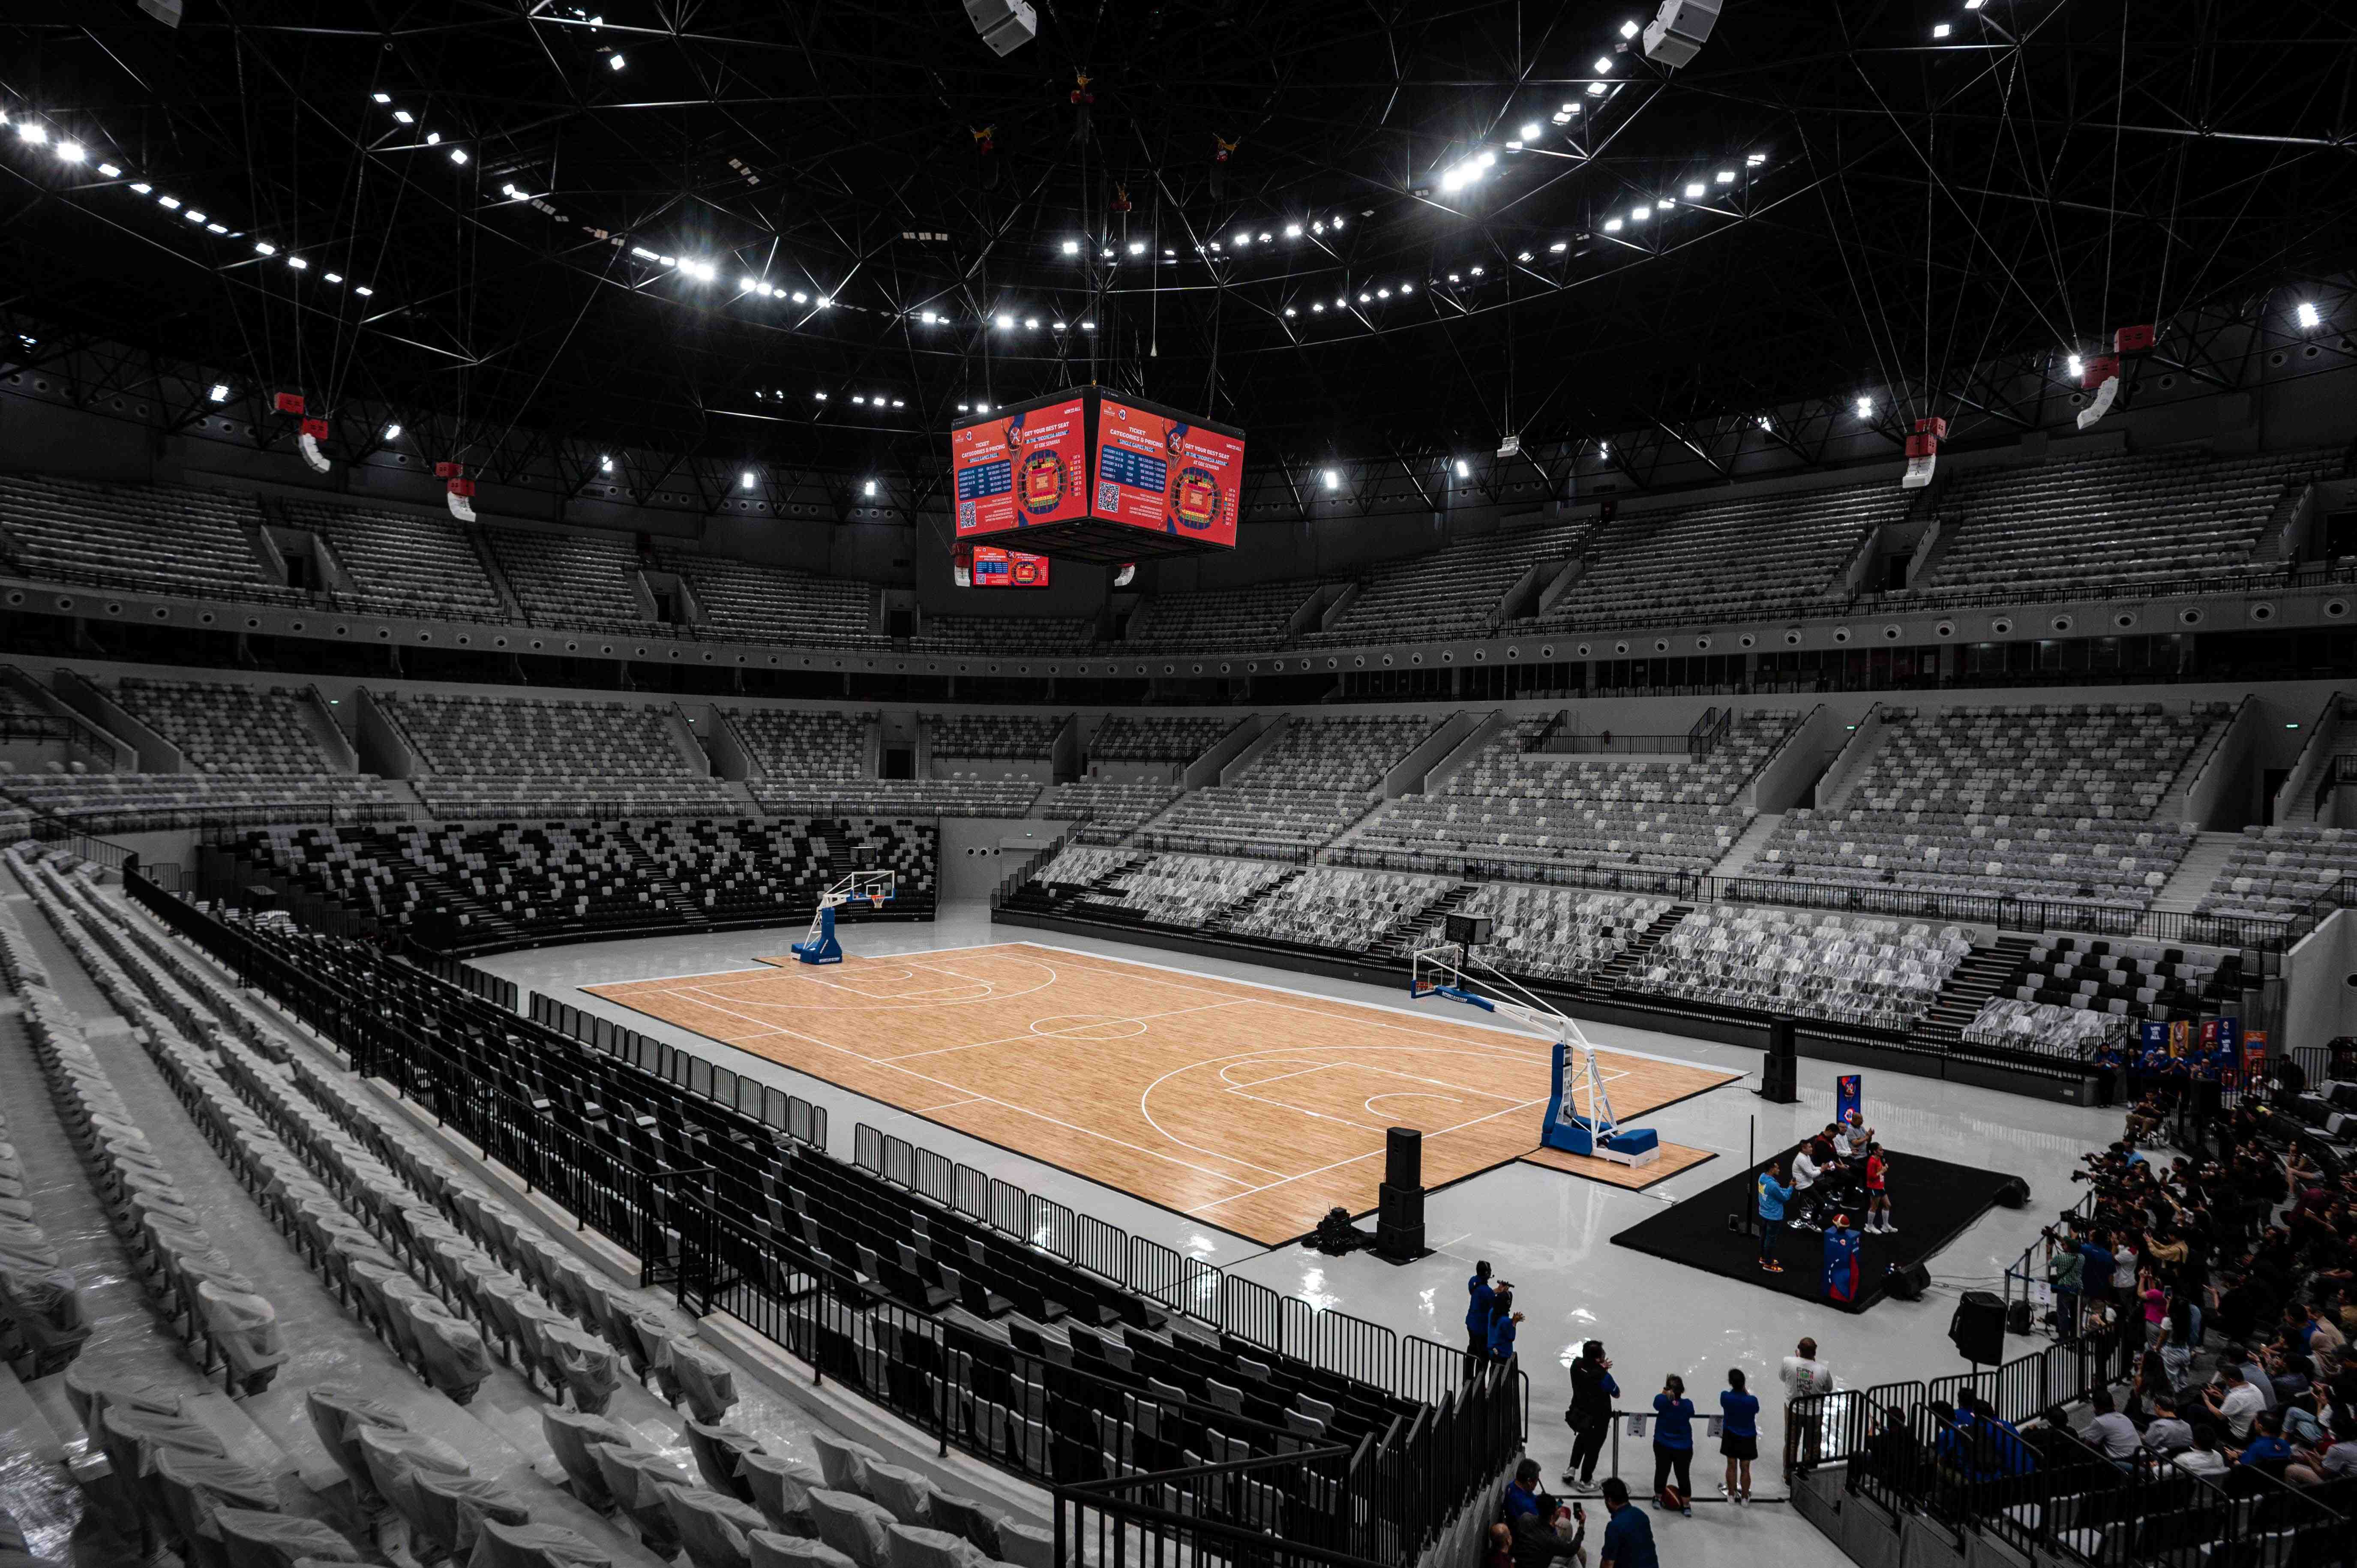 Arena Indonesia, Calon Colosseum Skena Esports Indonesia?